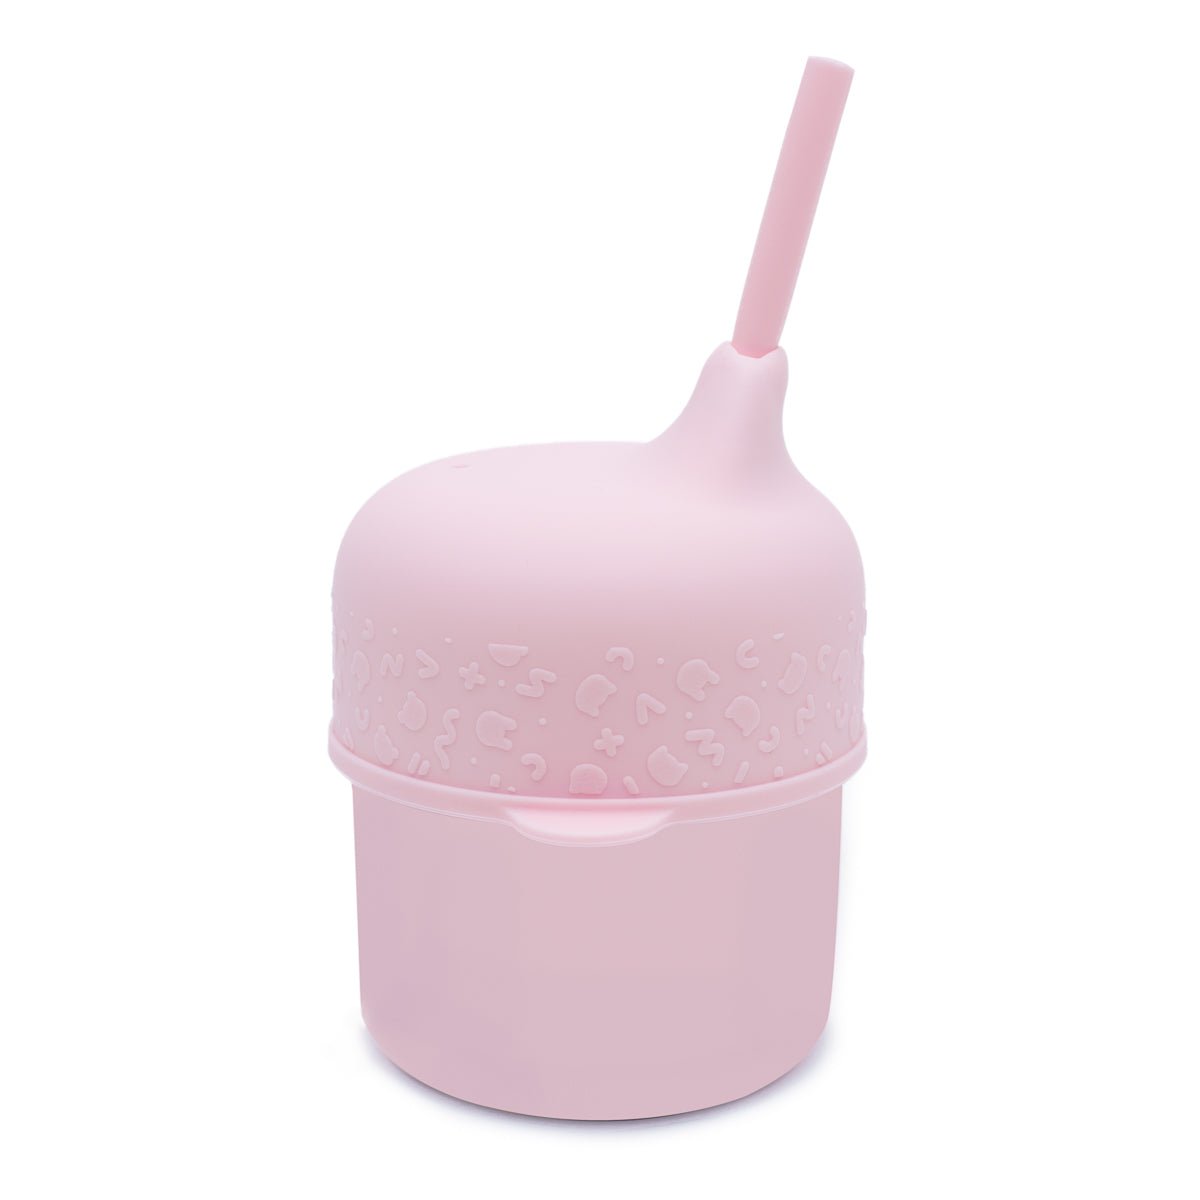 Sippie Cup Set in Powder Pink